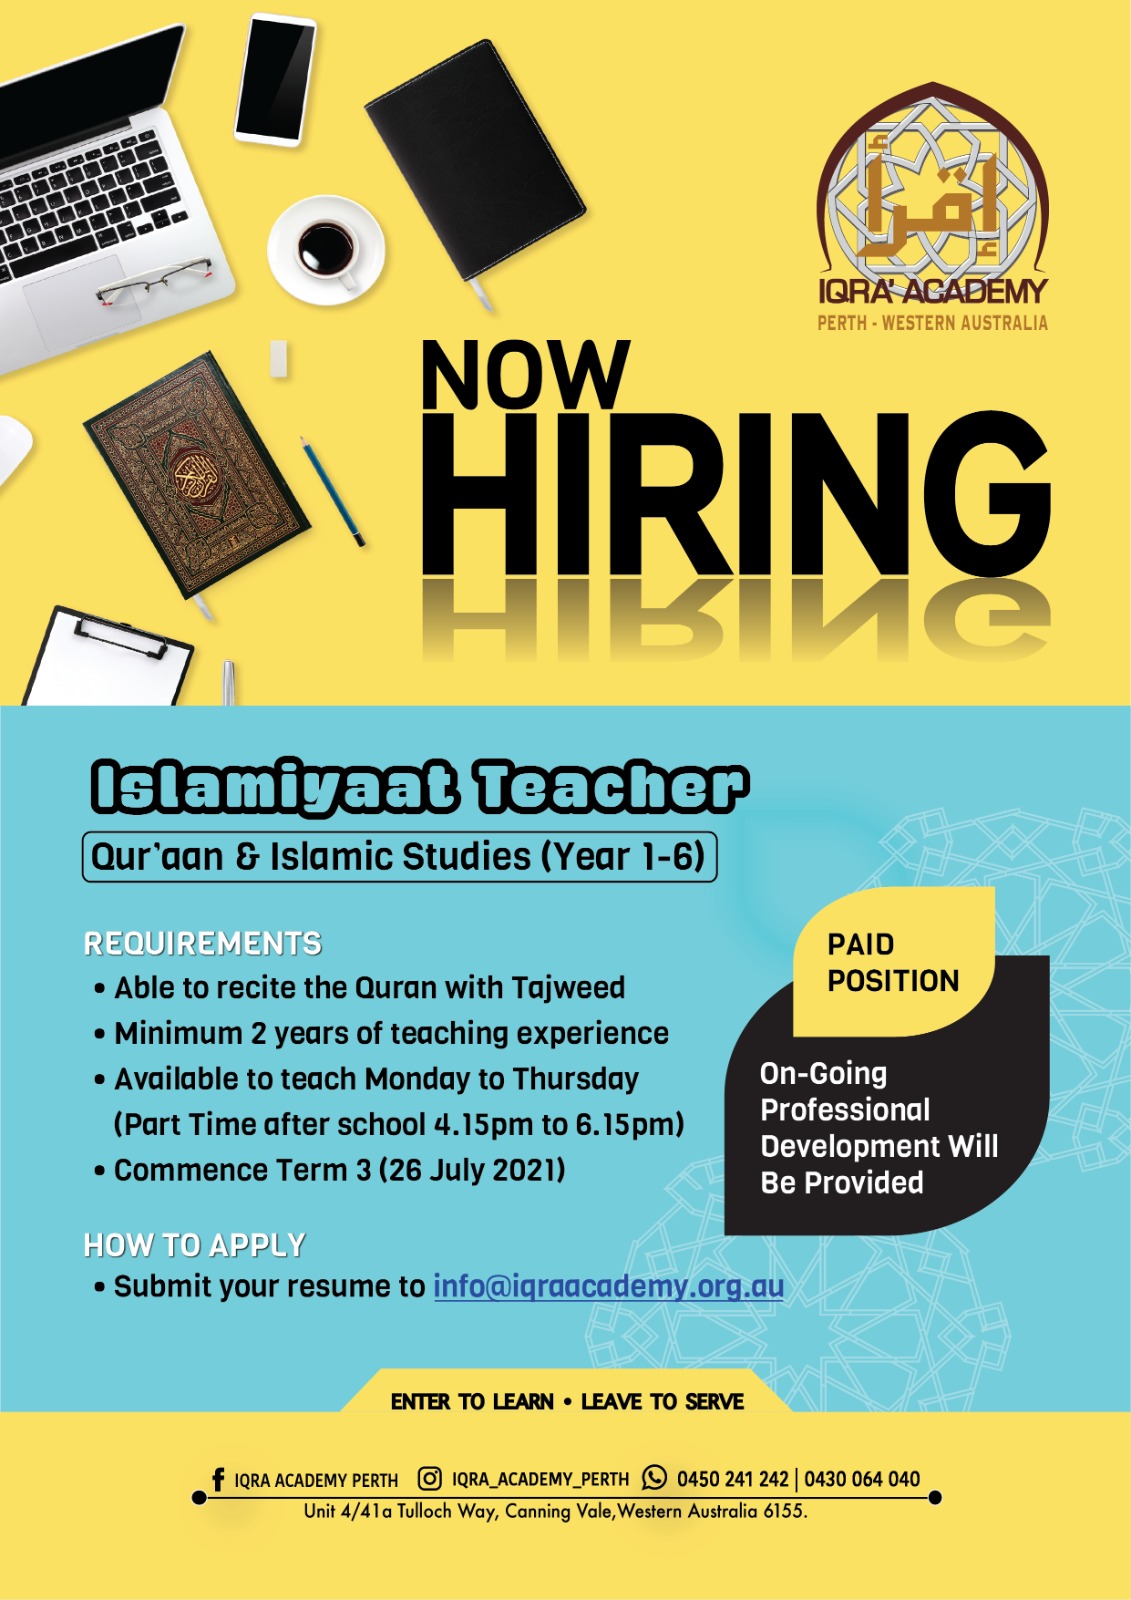 IQRA’ Academy Islamic Teacher Wanted